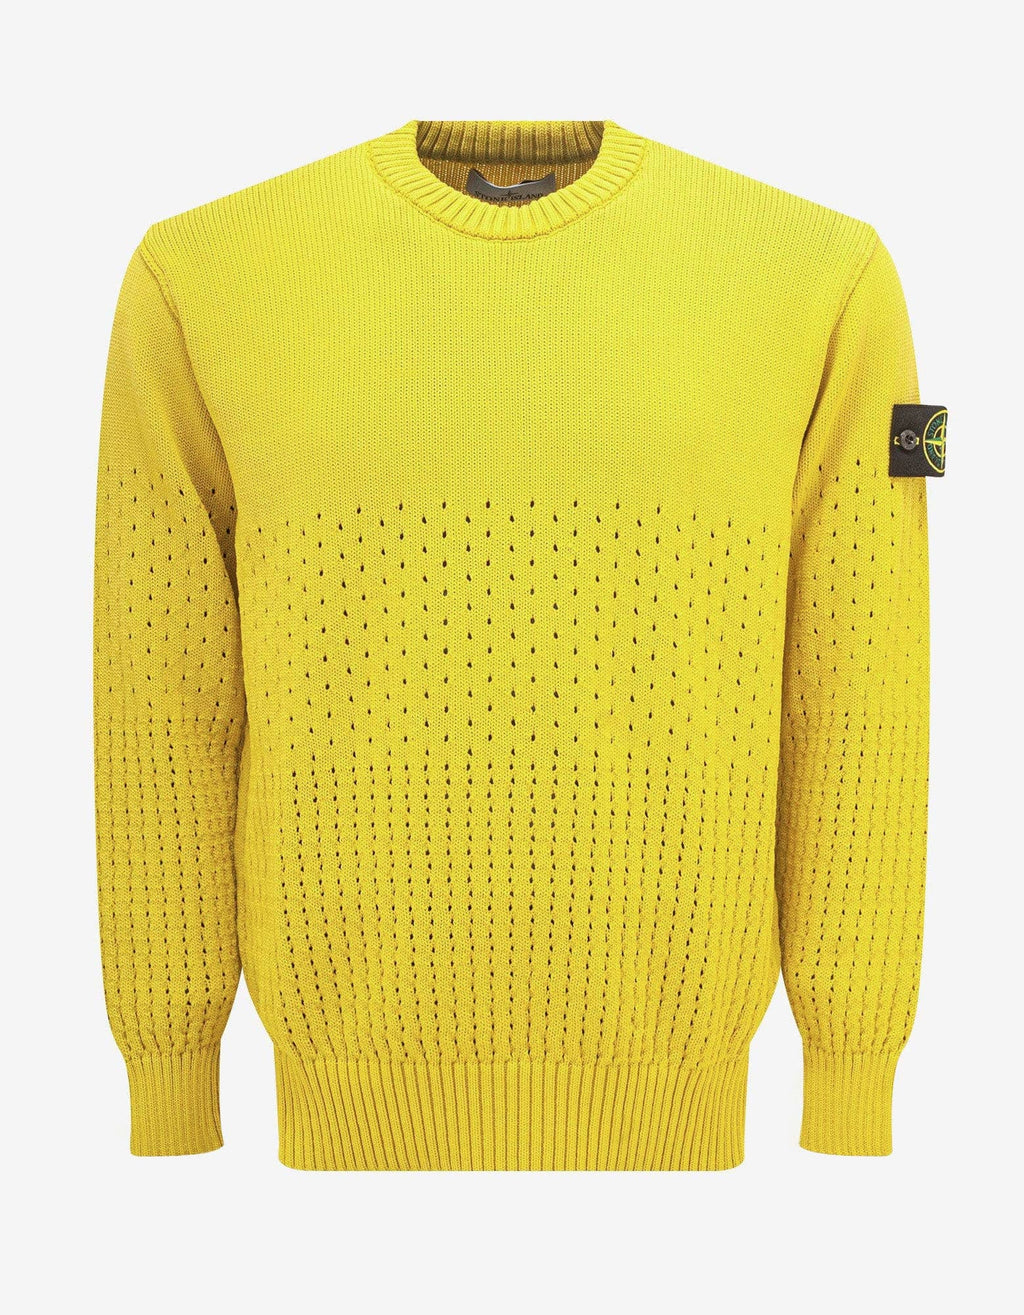 Stone Island Stone Island Yellow Perforated Sweater